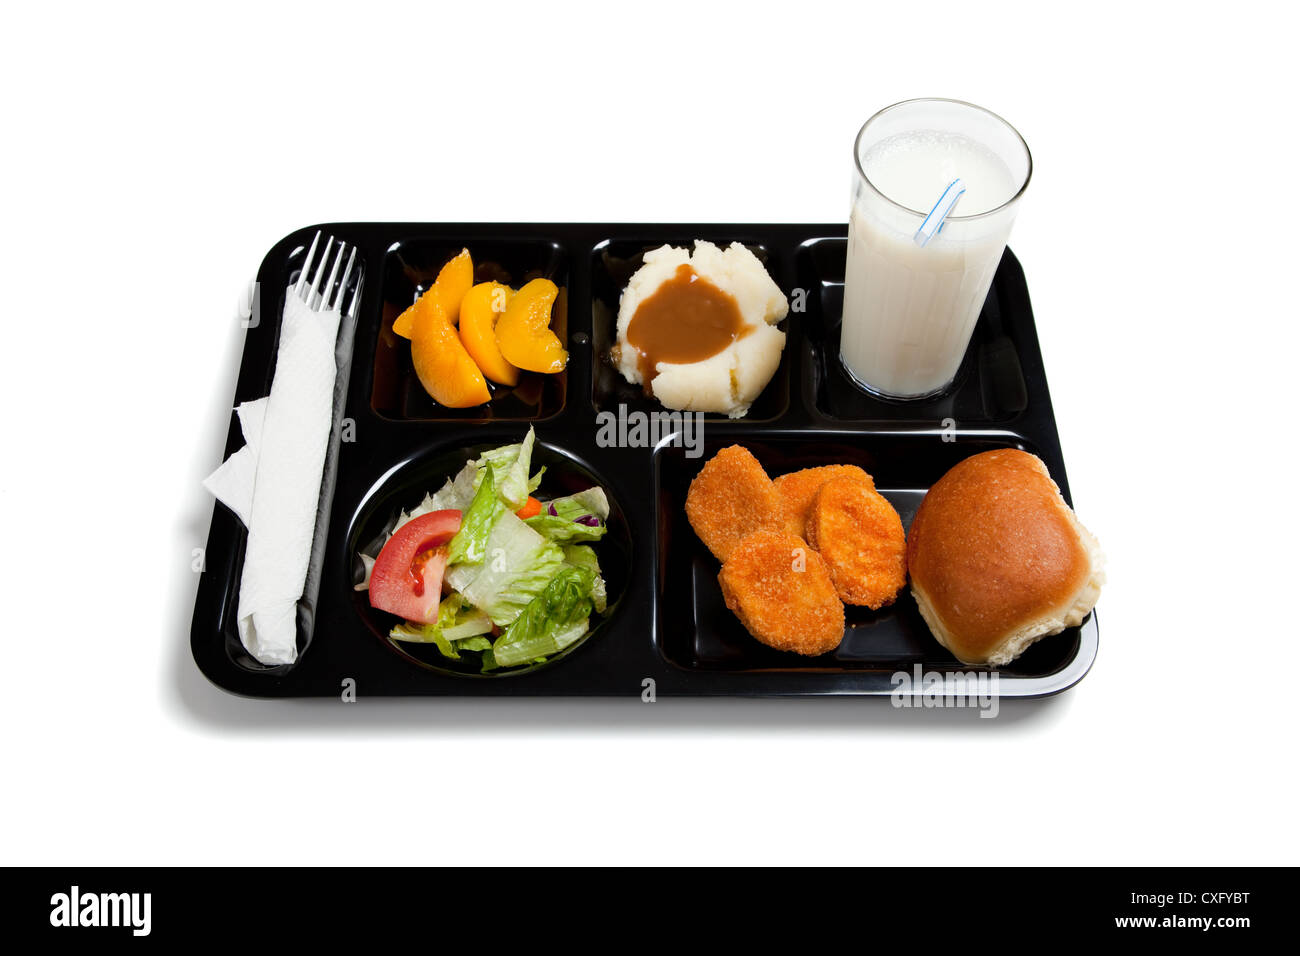 https://c8.alamy.com/comp/CXFYBT/school-lunch-tray-CXFYBT.jpg